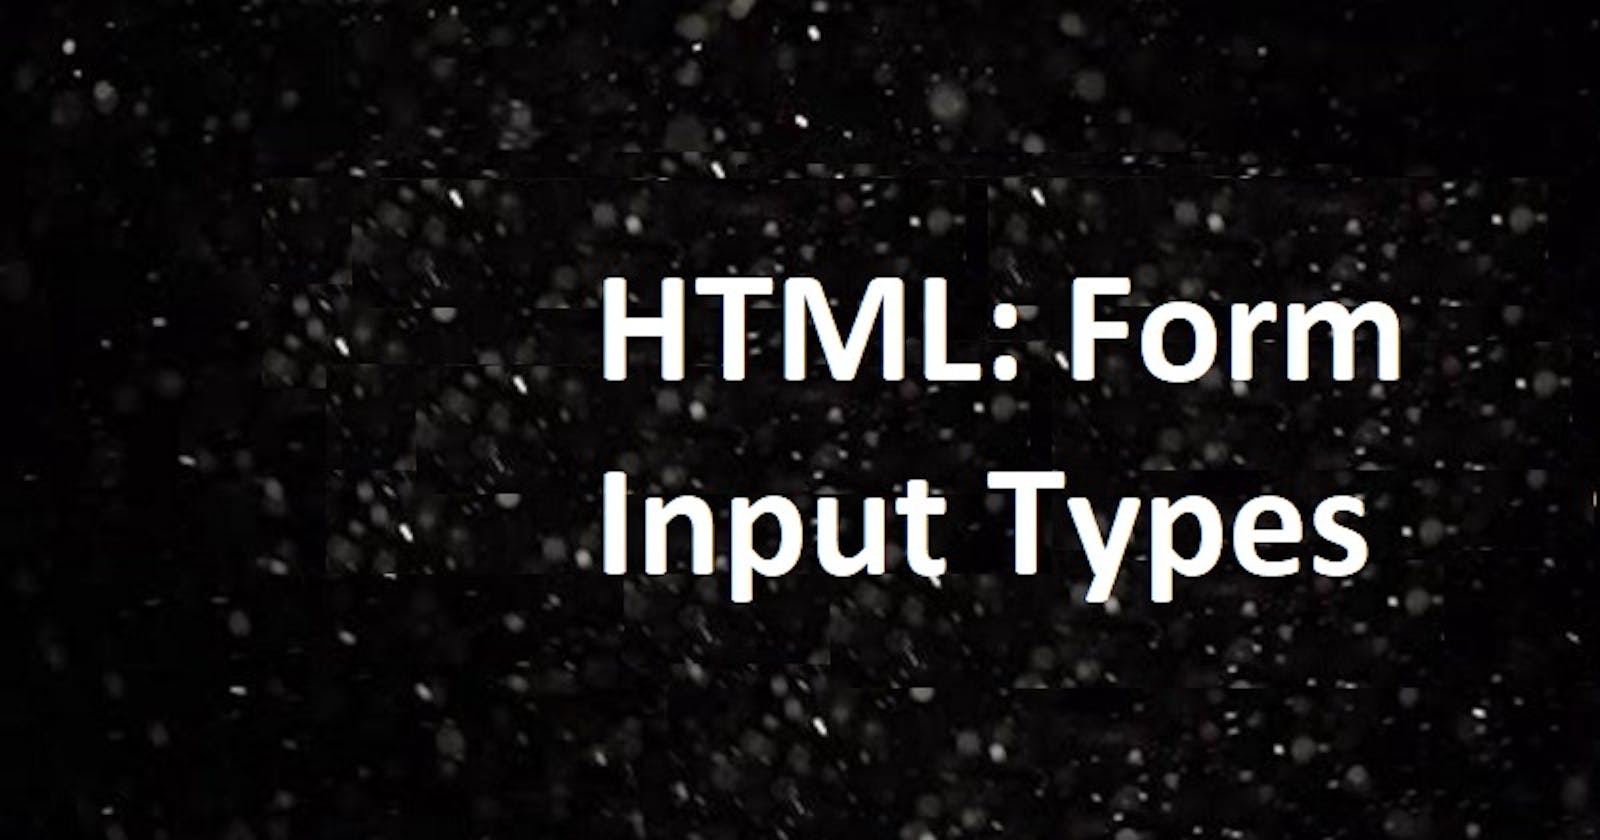 HTML: Form Input types